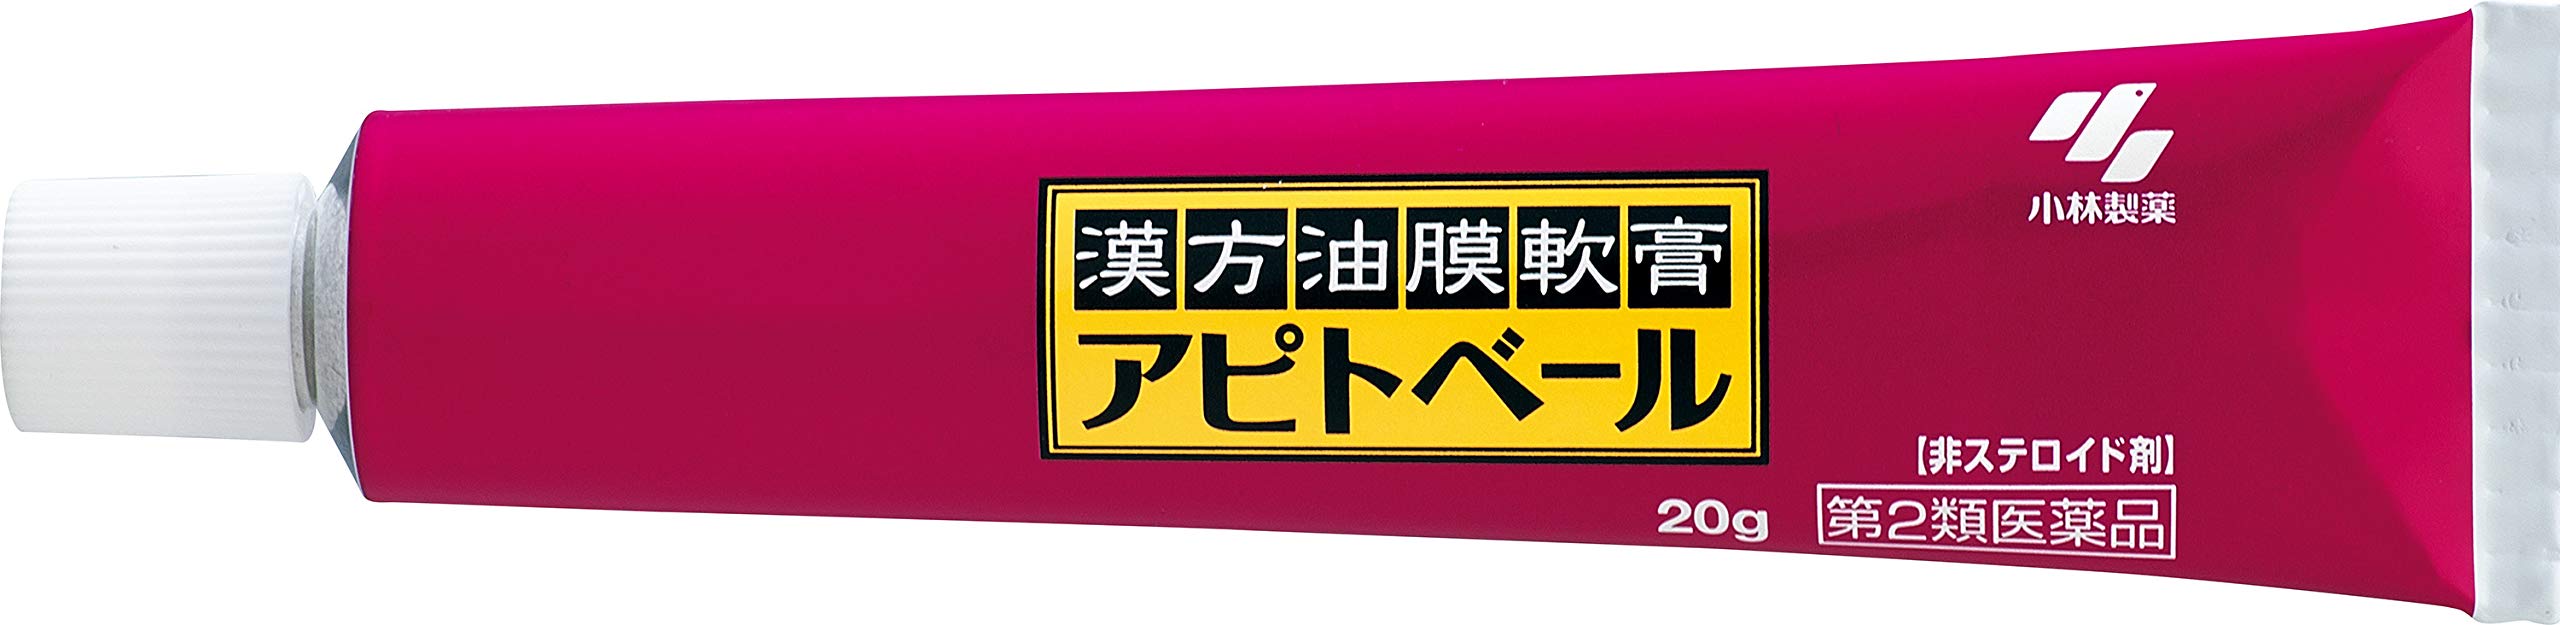 Apitvale Apitoberu 20G - 2 Drugs From Japan